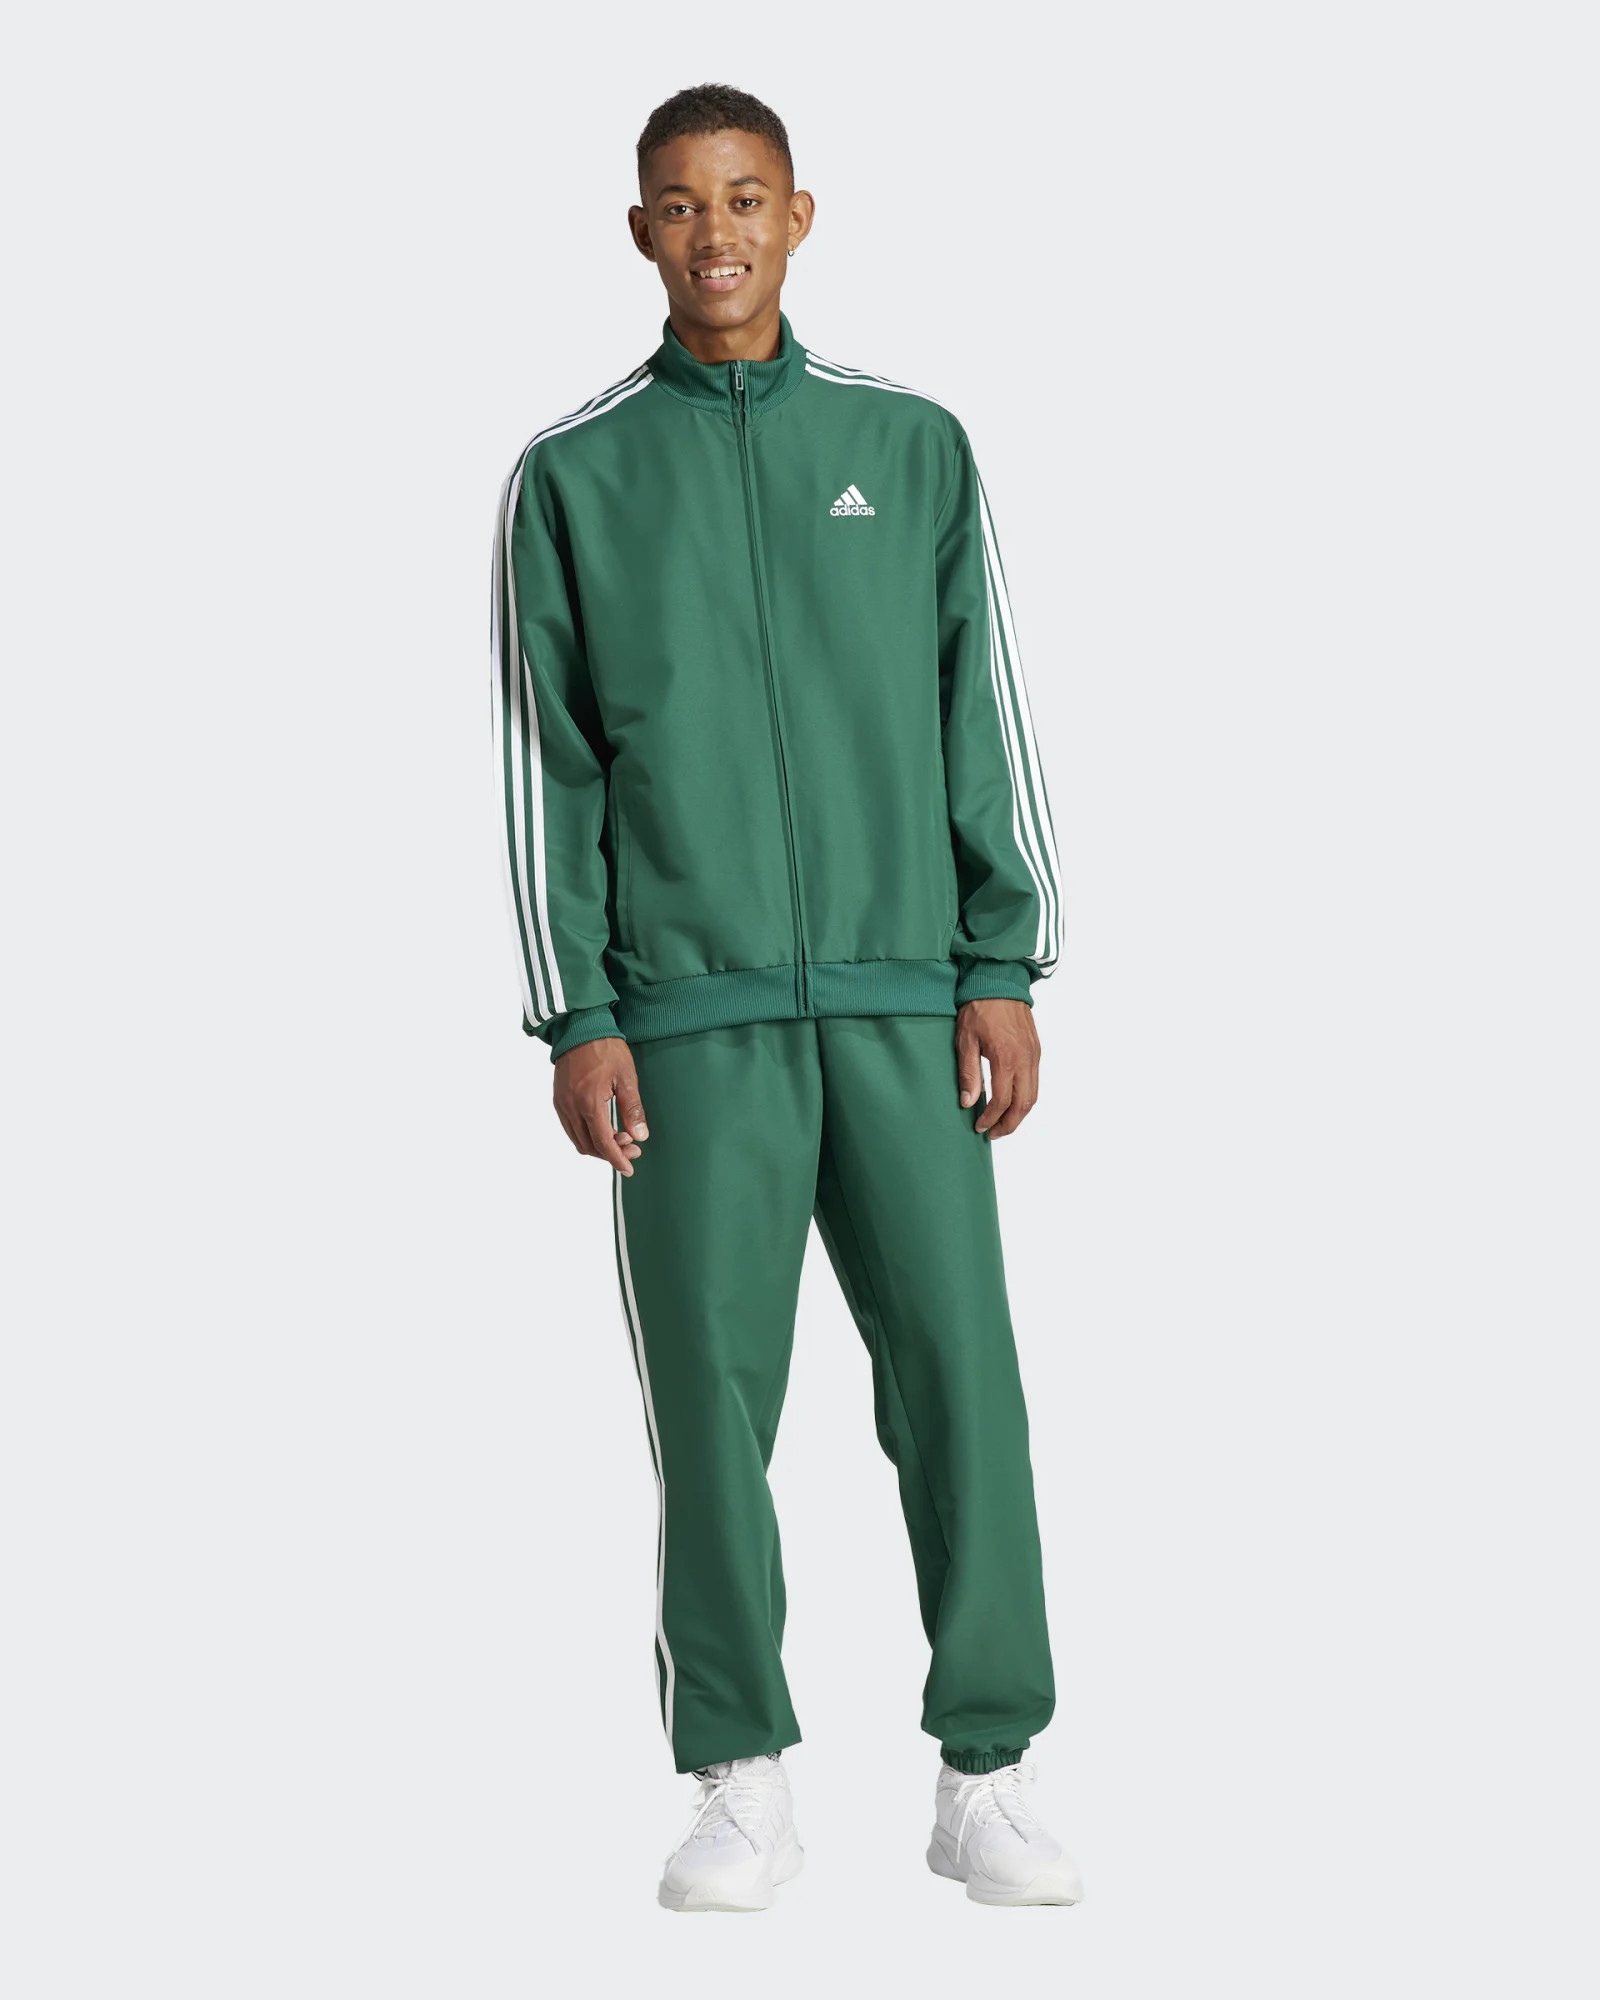  Tuta Intera Completa UOMO Adidas 3-Stripes Woven Verde